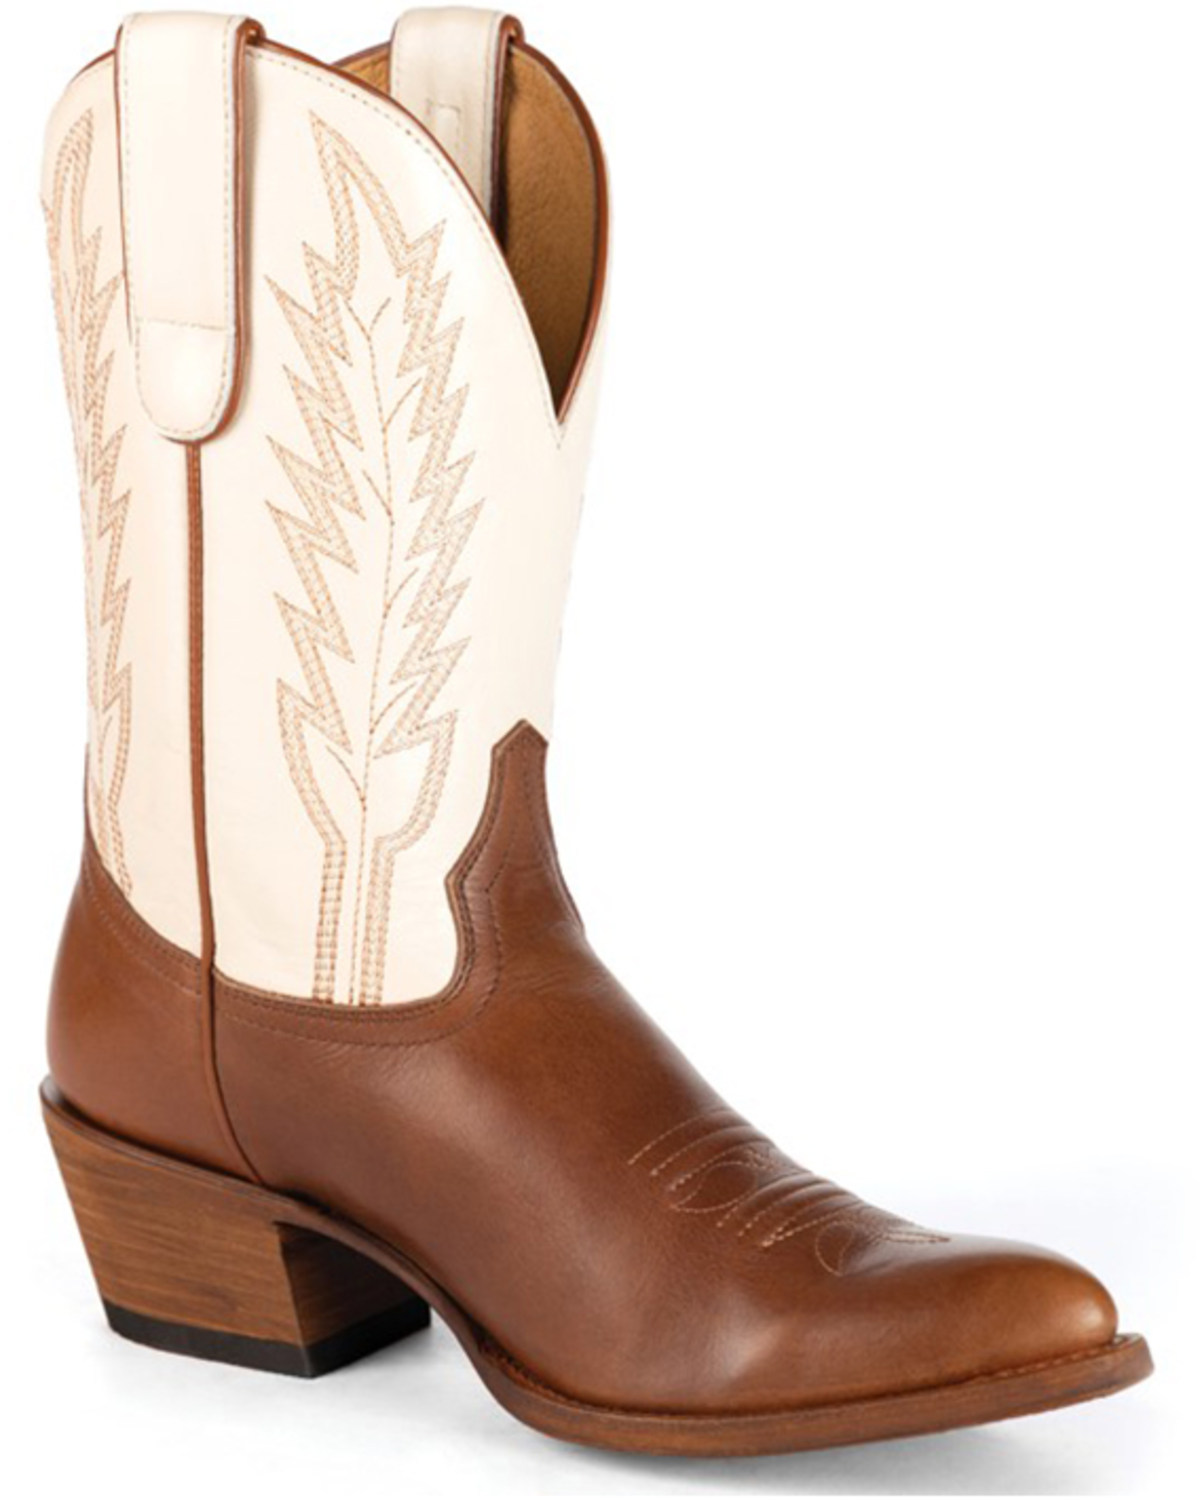 Macie Bean Women's Oh My Western Boots - Round Toe